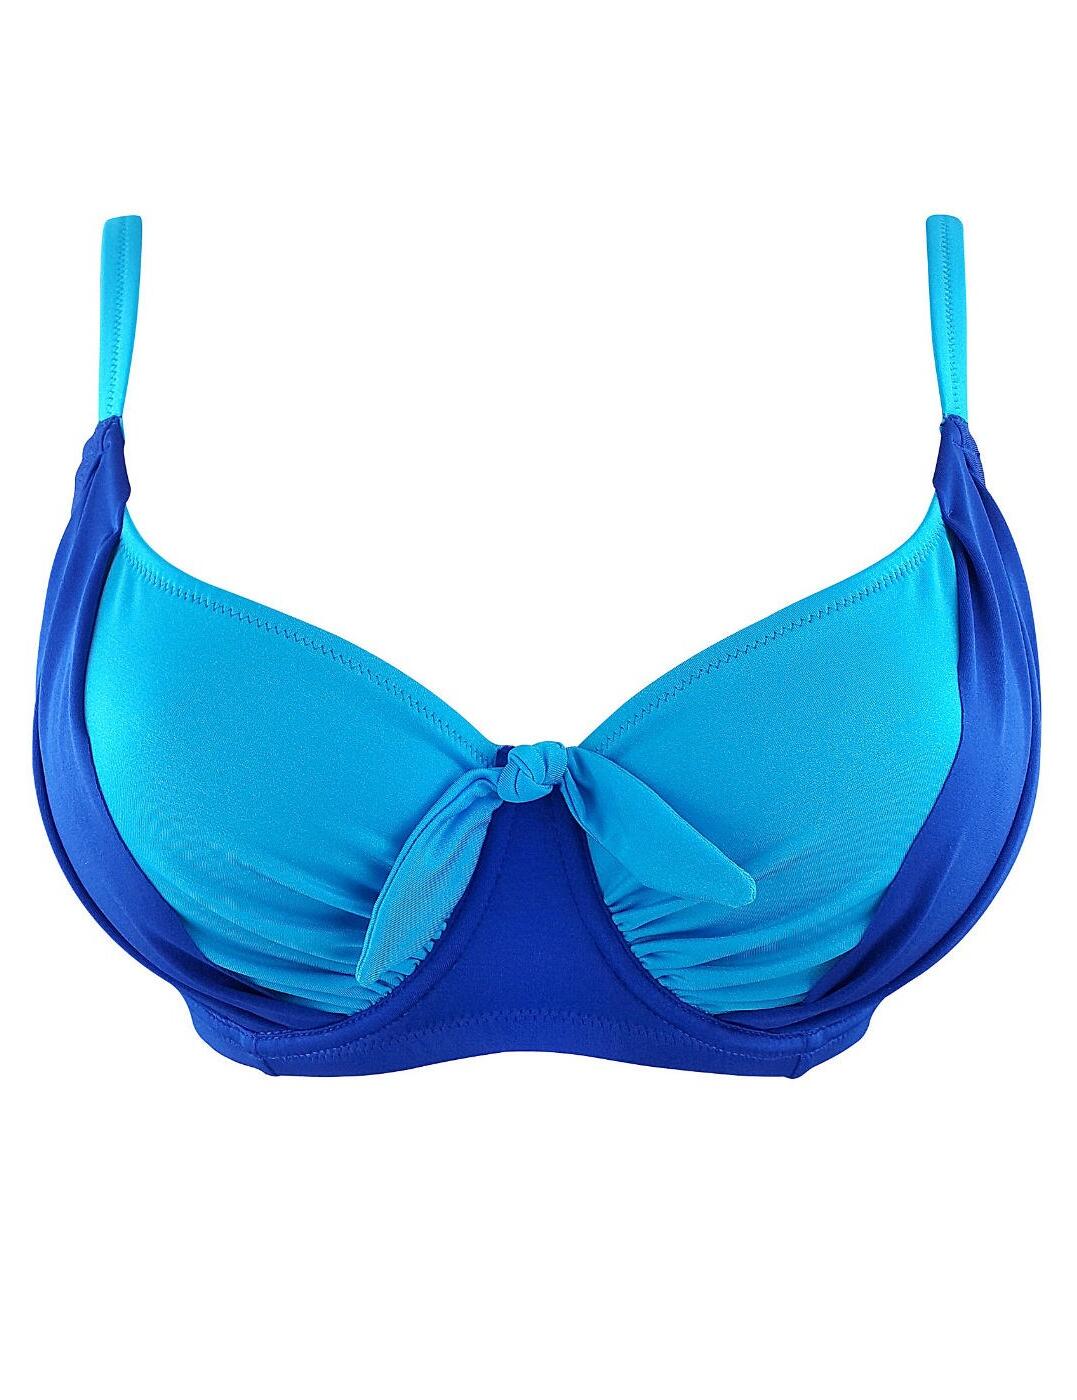 Pour Moi Bahamas Underwired Bikini Top 27002 New Womens Swimwear | eBay